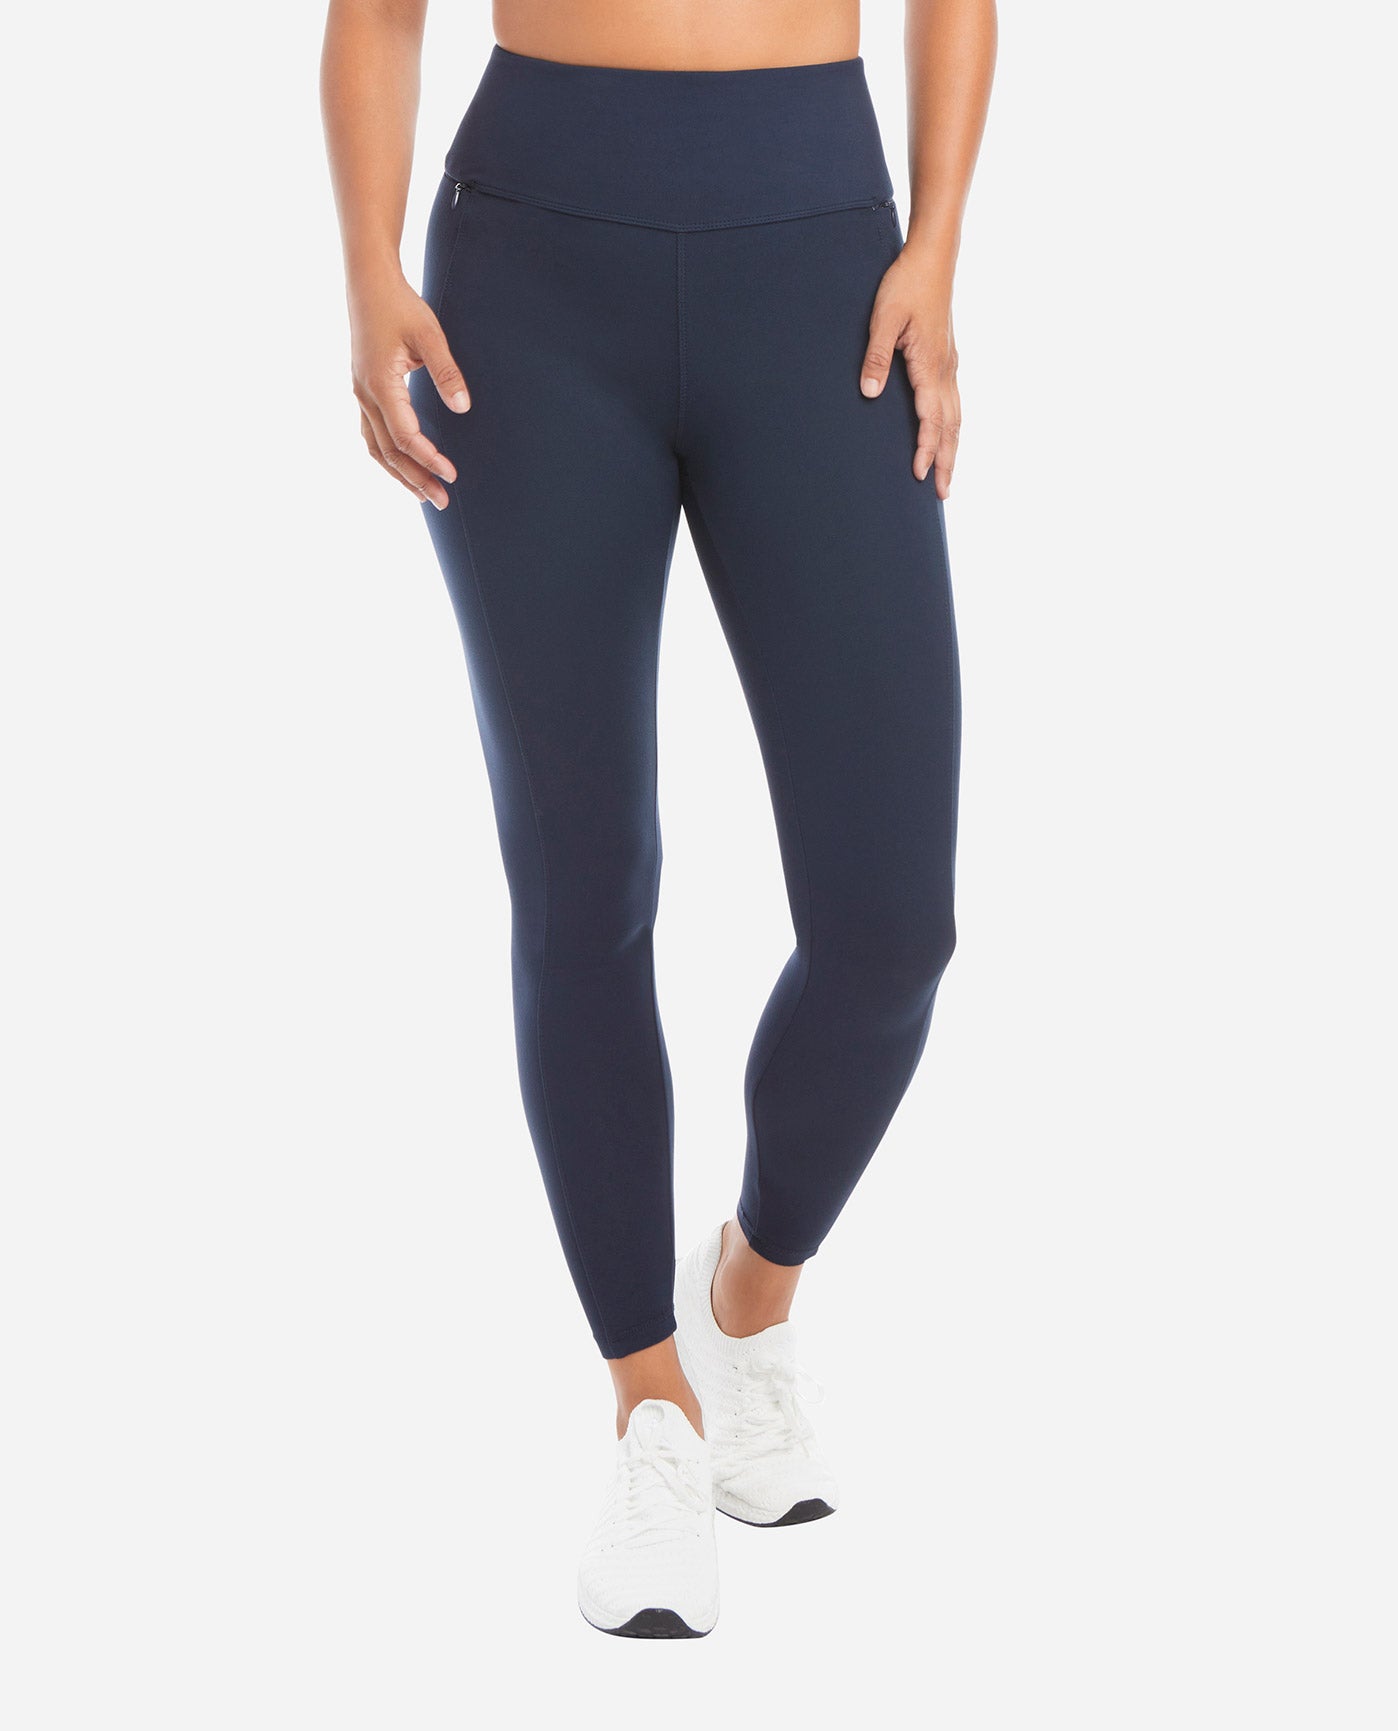 Danskin Women's Leggings Blue Medium High Waistband Pockets 7/8 Length  Stretch